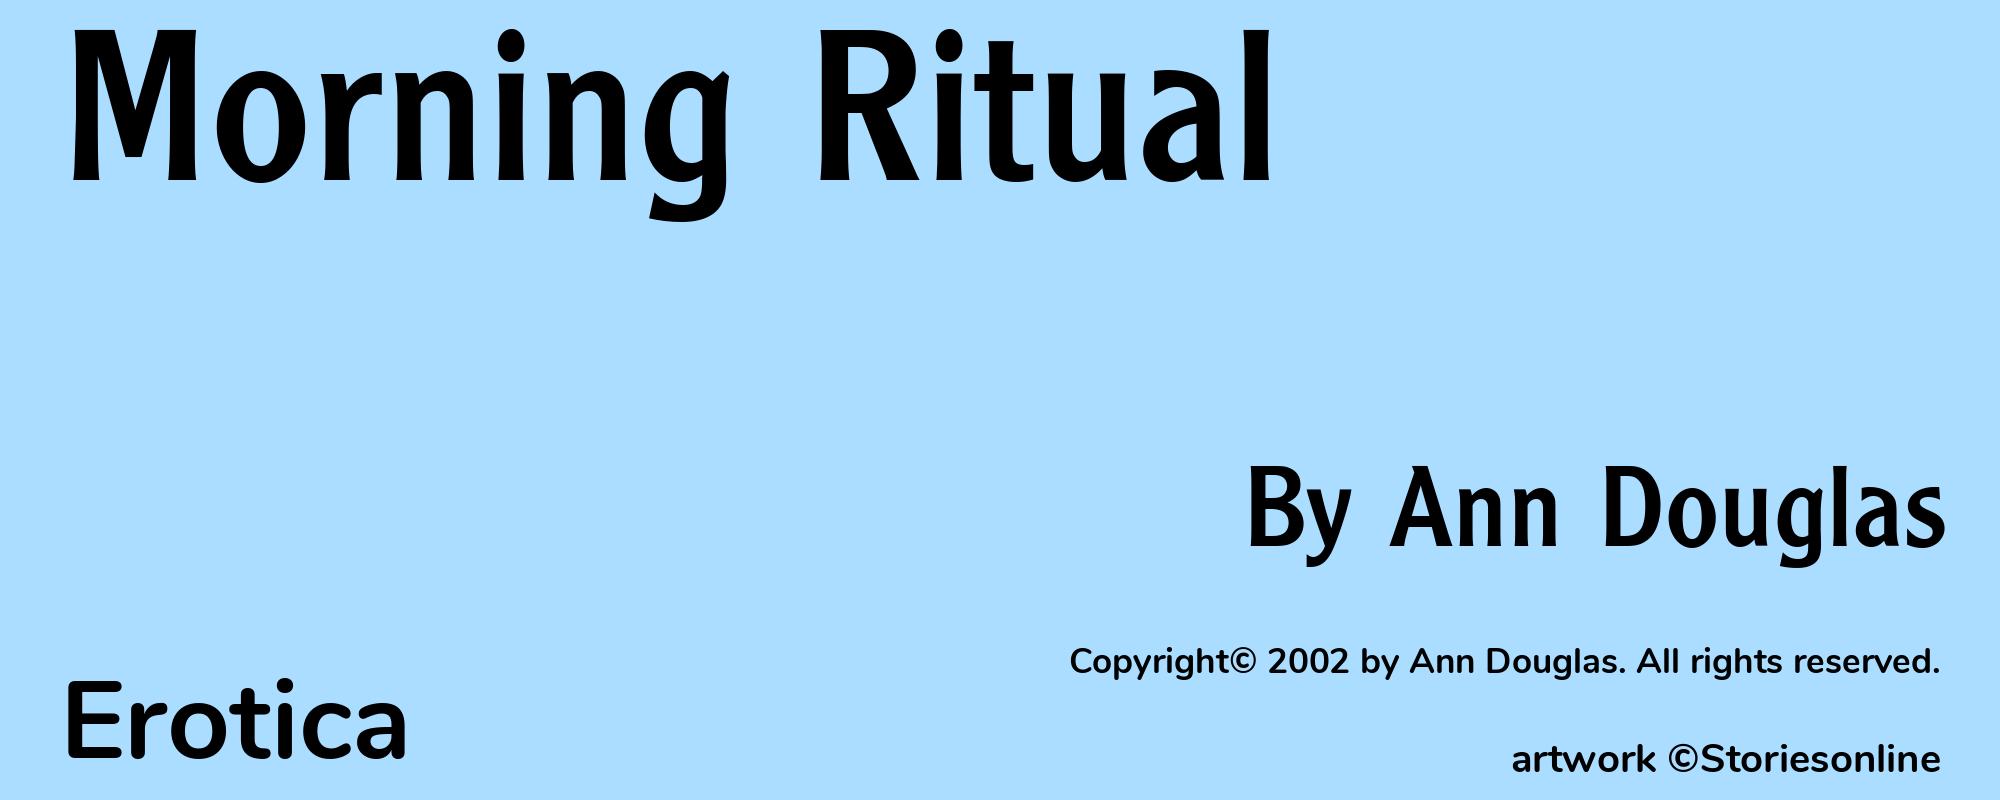 Morning Ritual - Cover